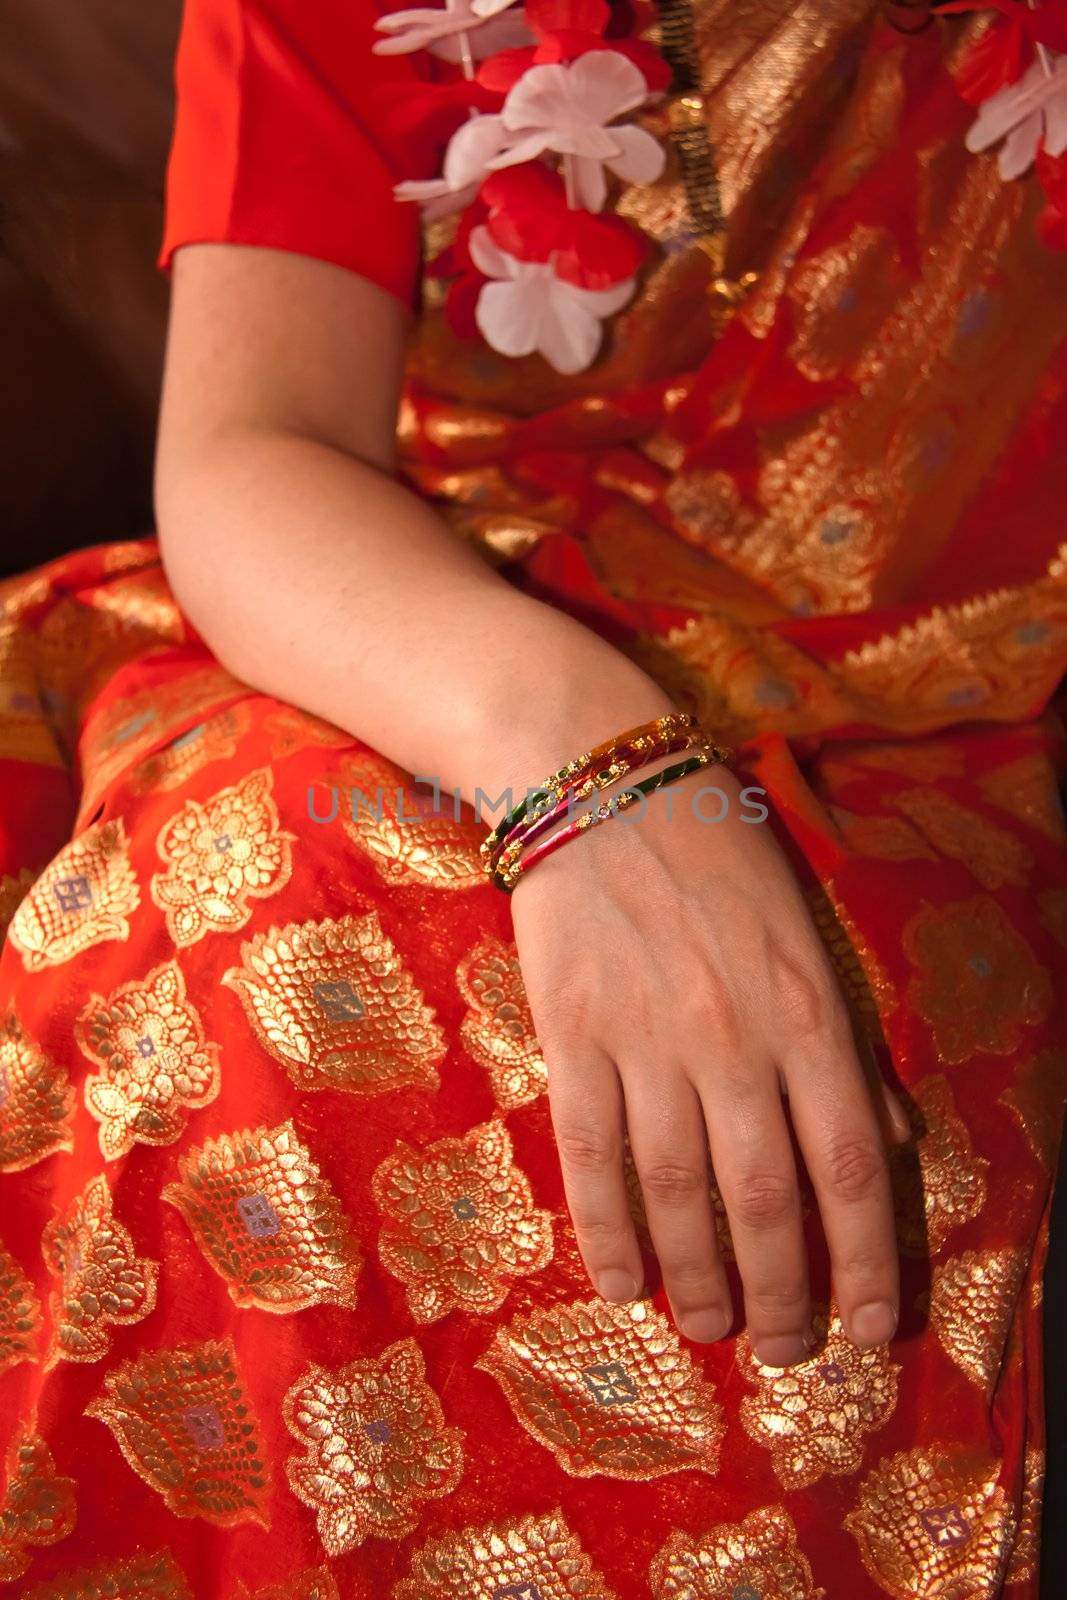 Orange Sari with Bangled wrist by RachelD32